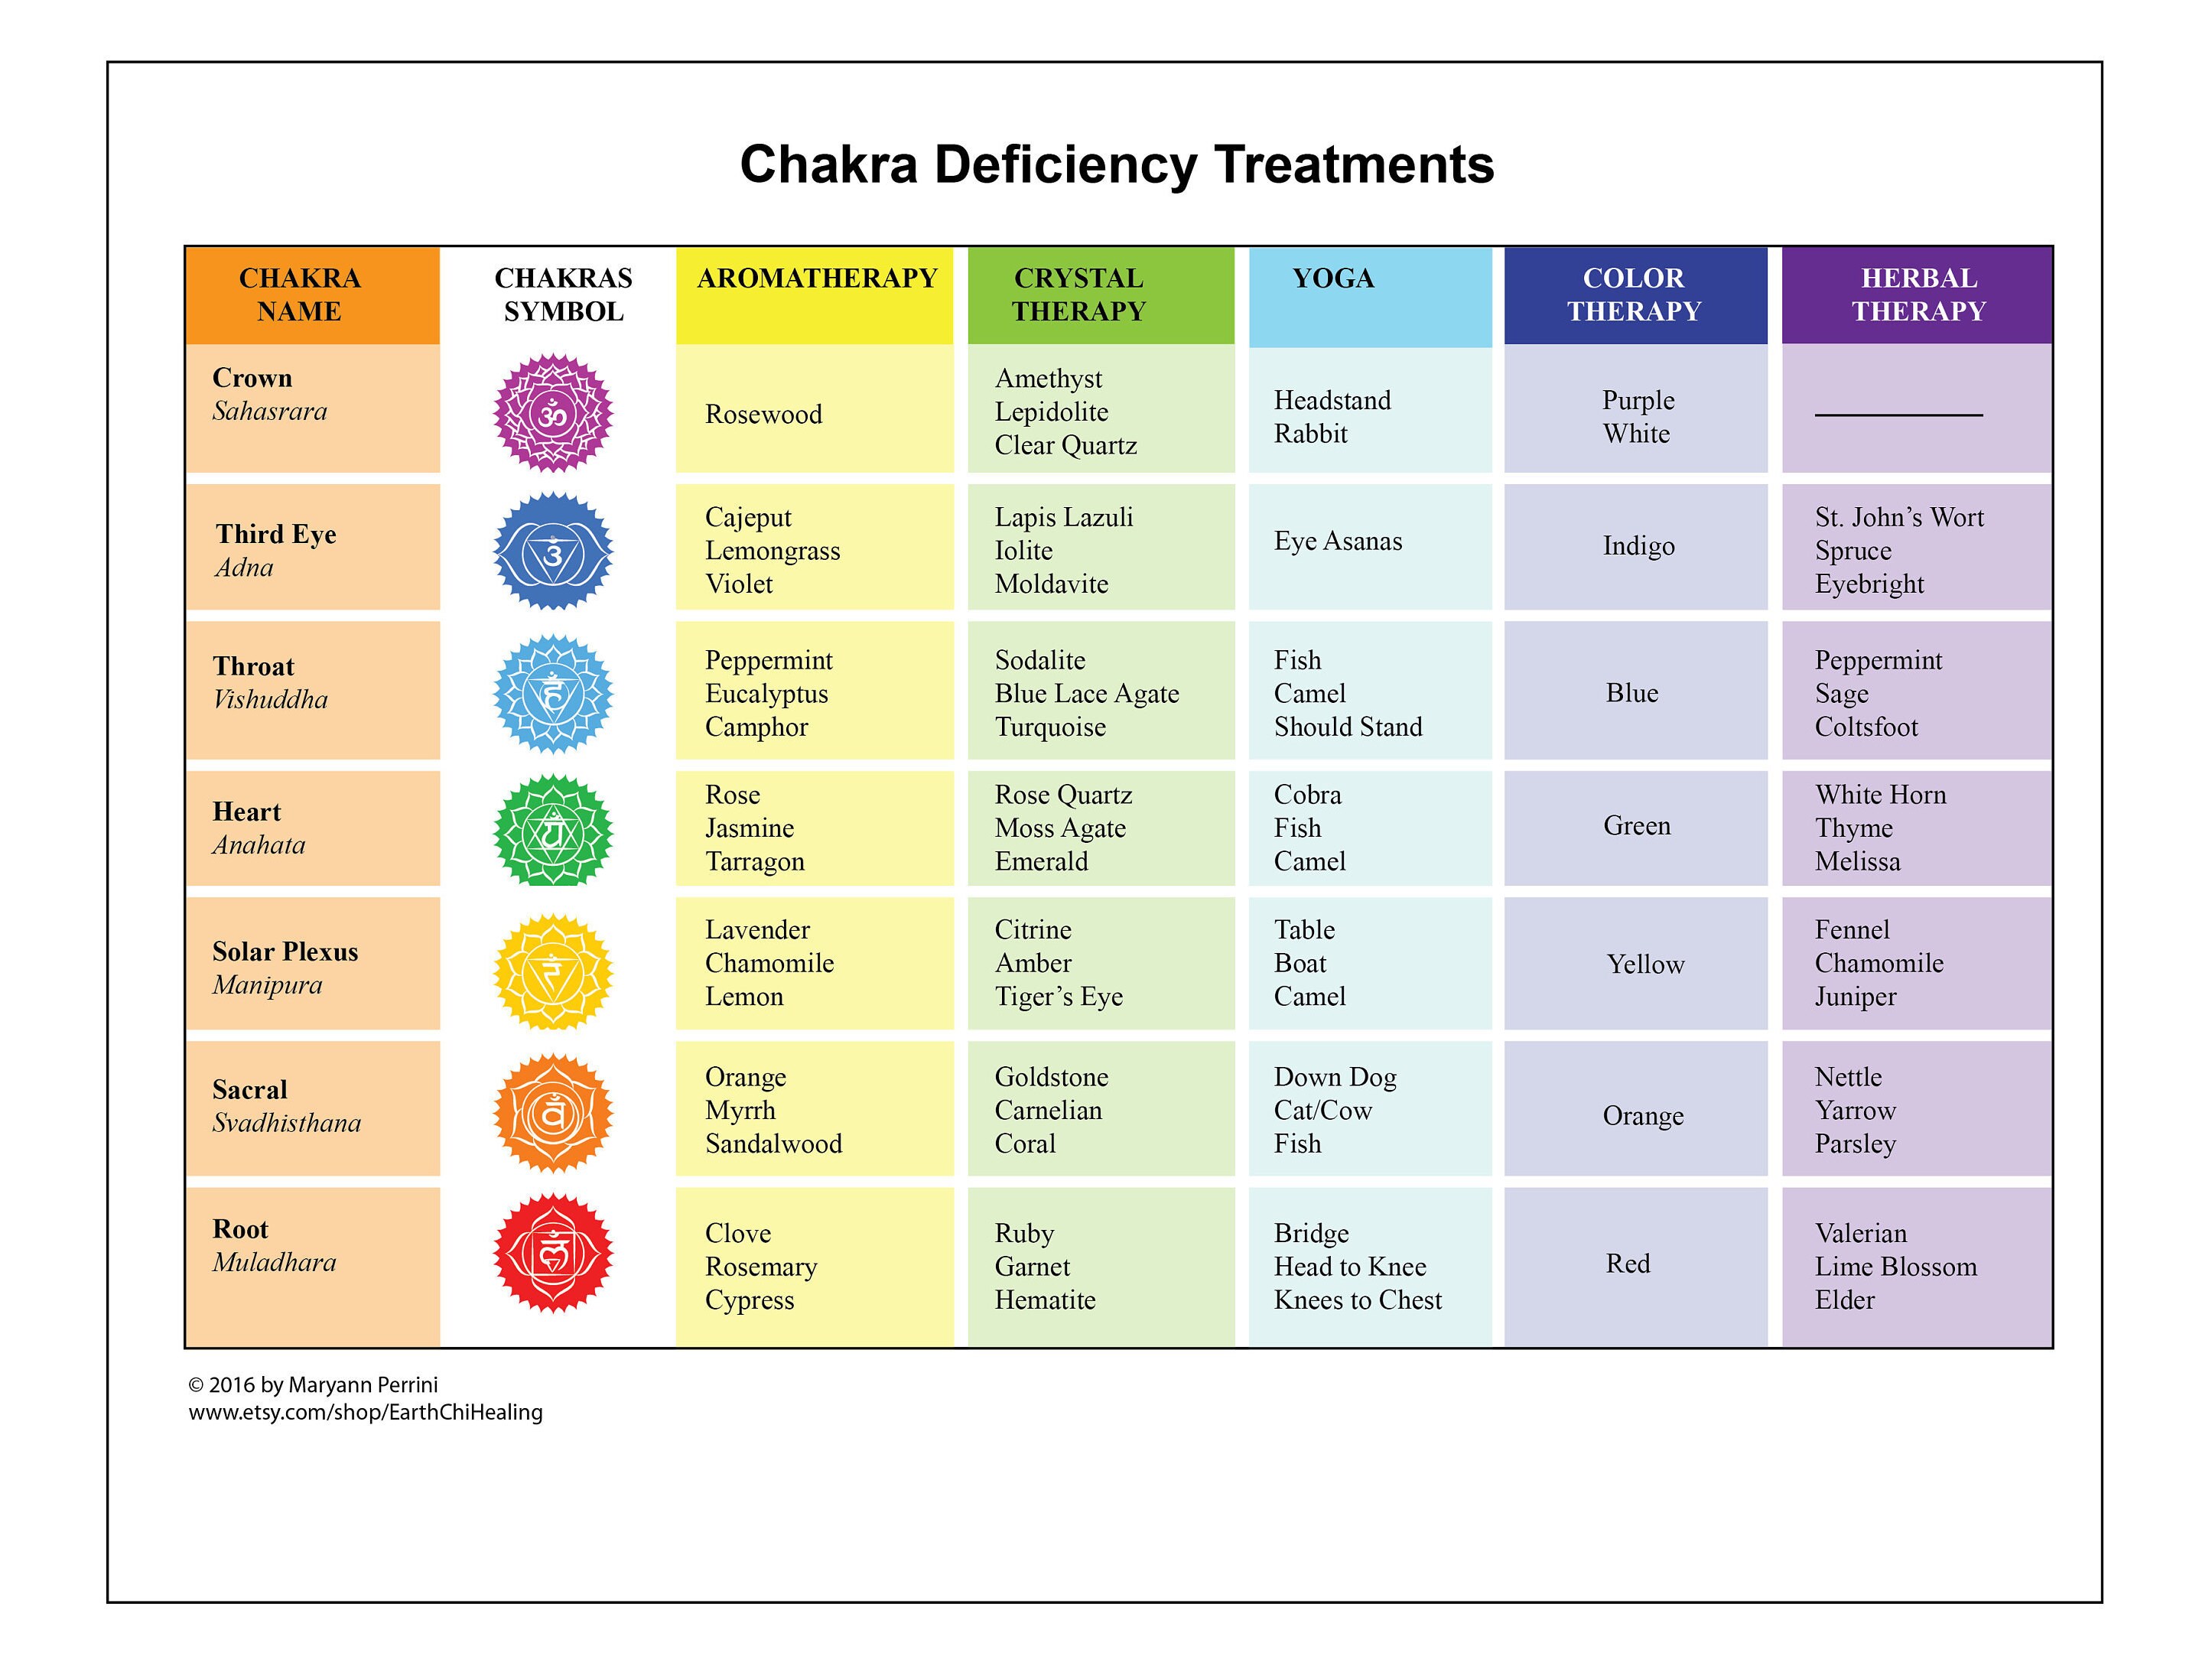 Different Treatment Methods for Chakra Deficiencies Printable Cheatsheet.